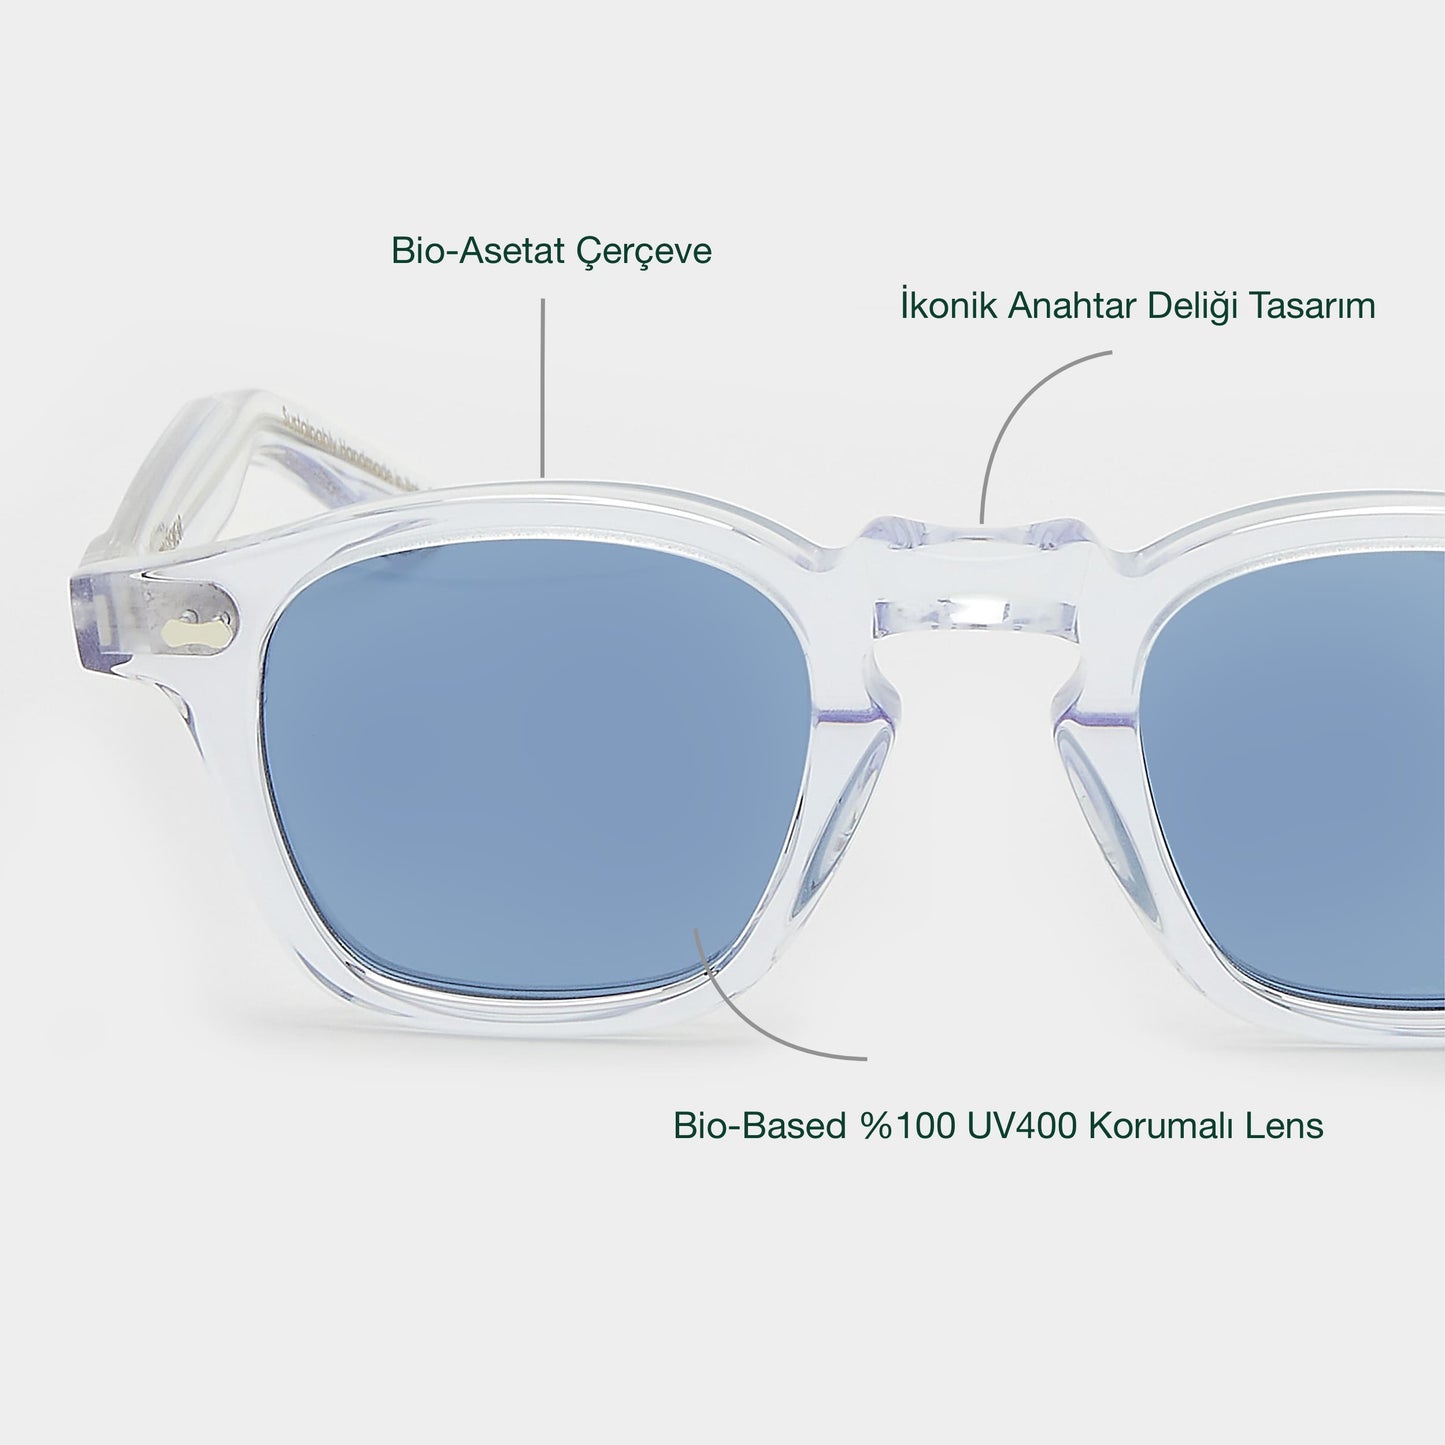 TBD Eyewear Cord Eco Transparent / Blue